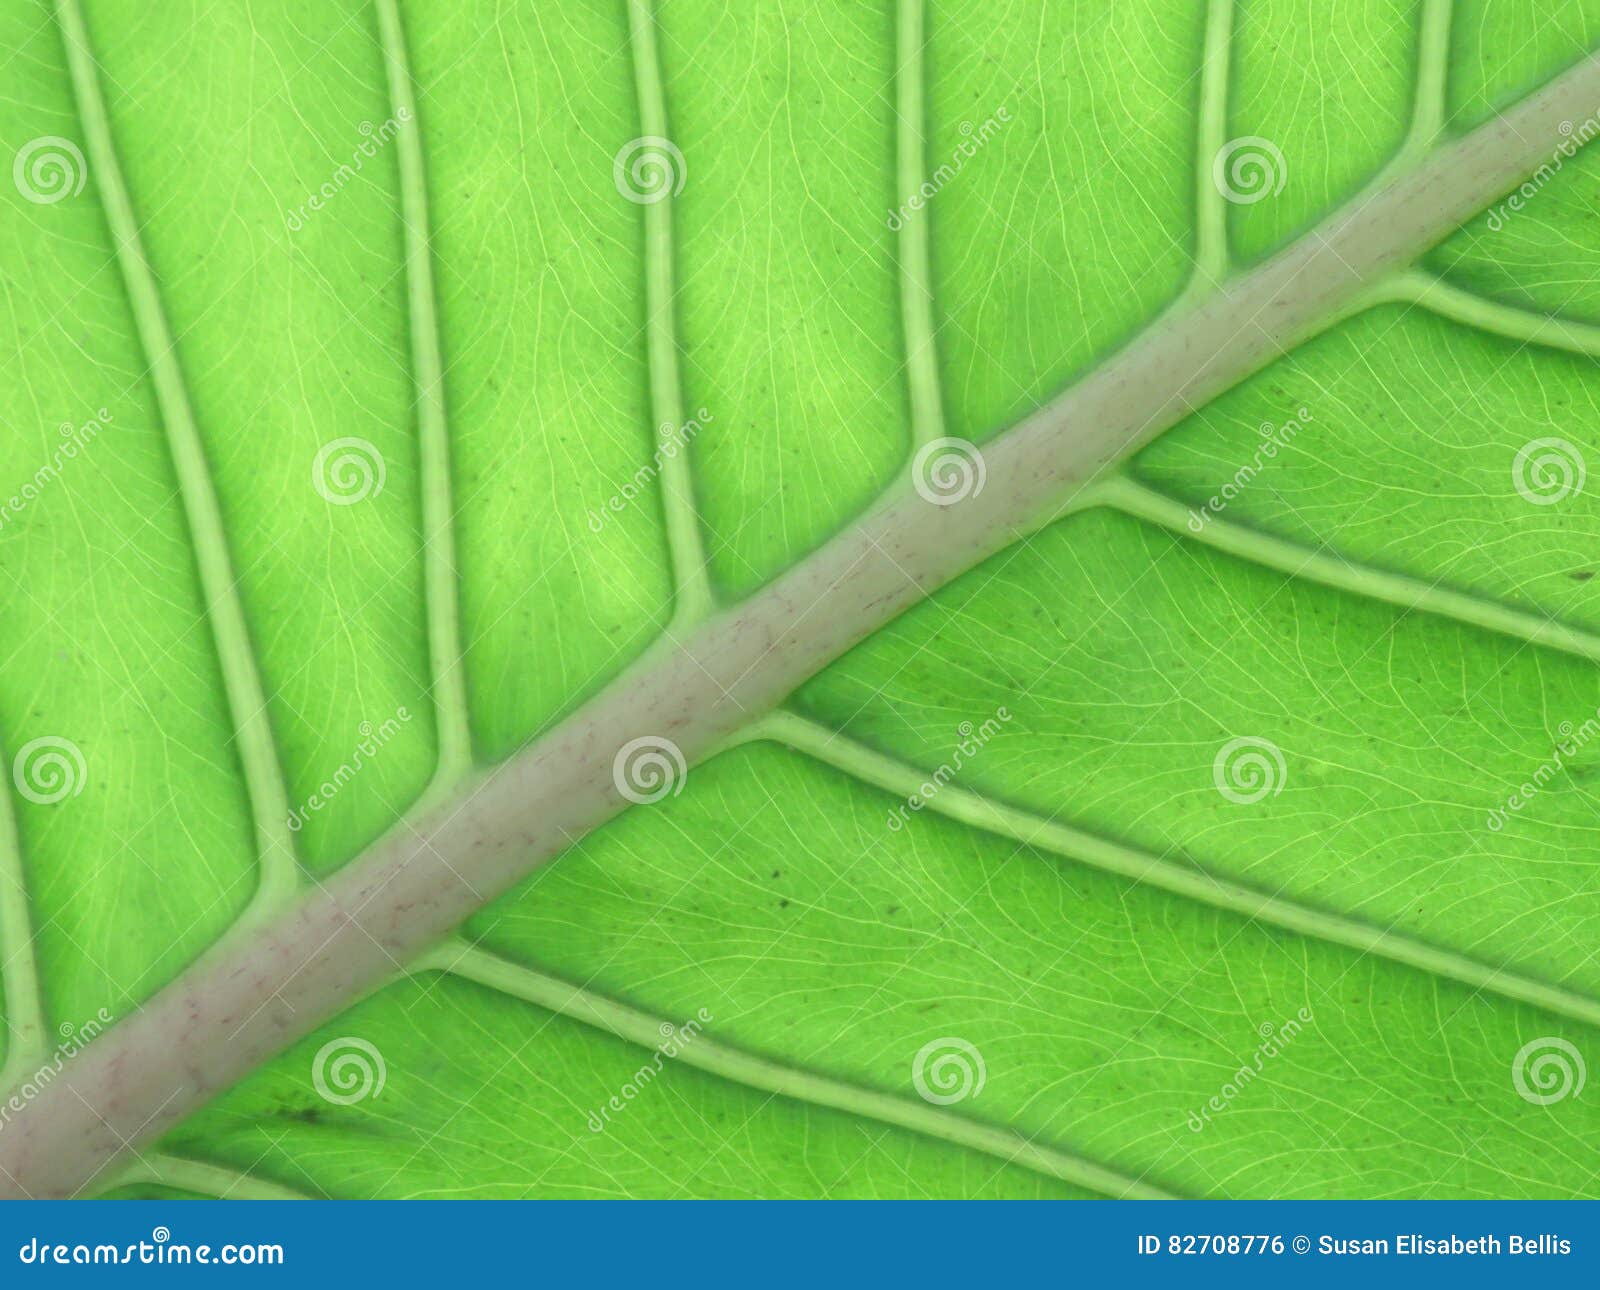 midrib and veins of a leaf